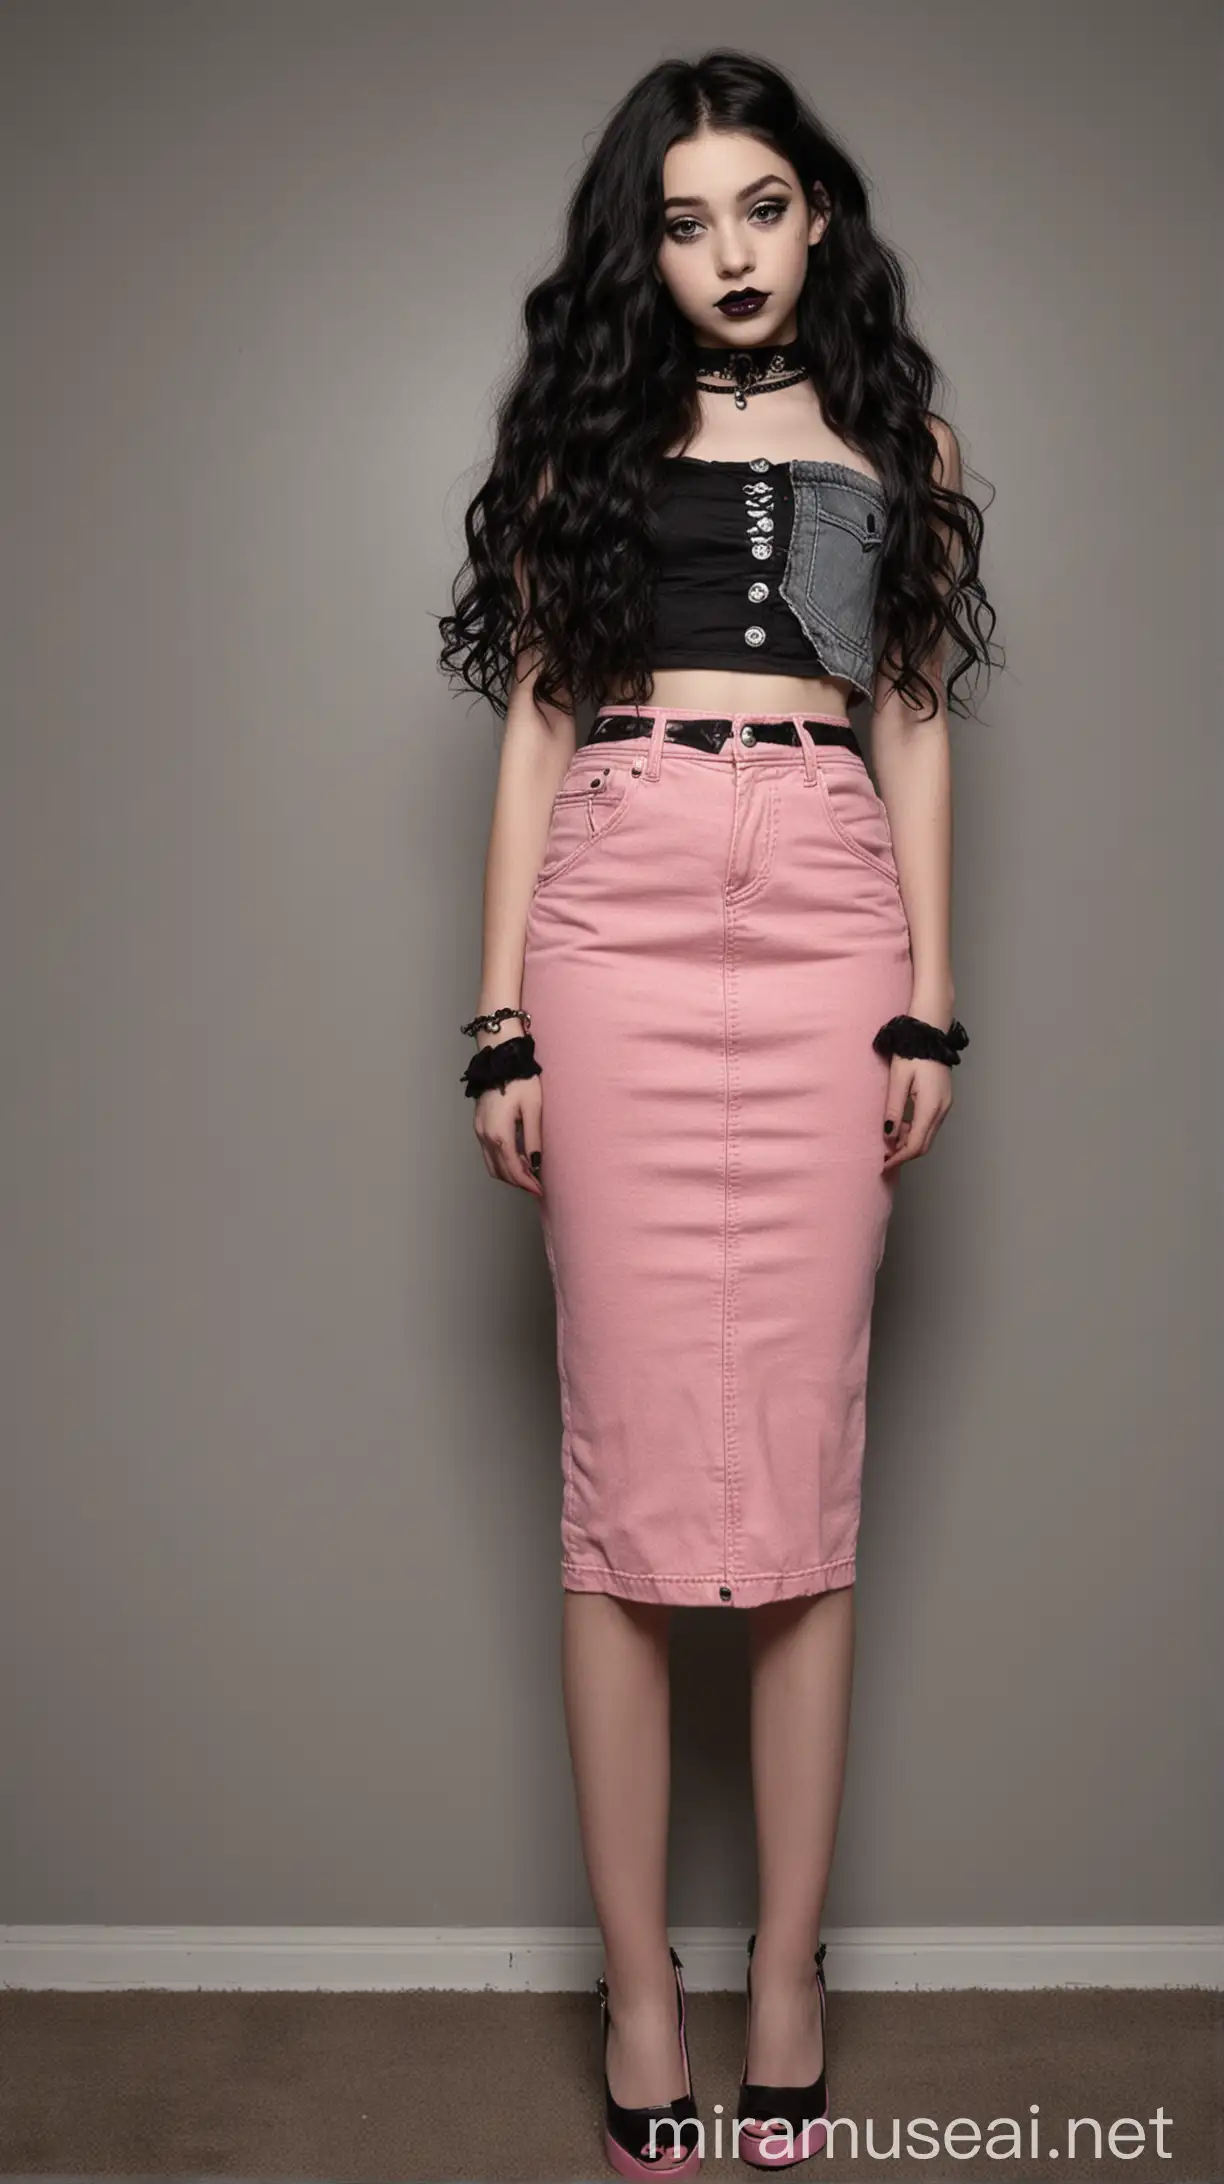 Gothic Teen in Pink Denim Skirt and High Heels in Empty Grey Room